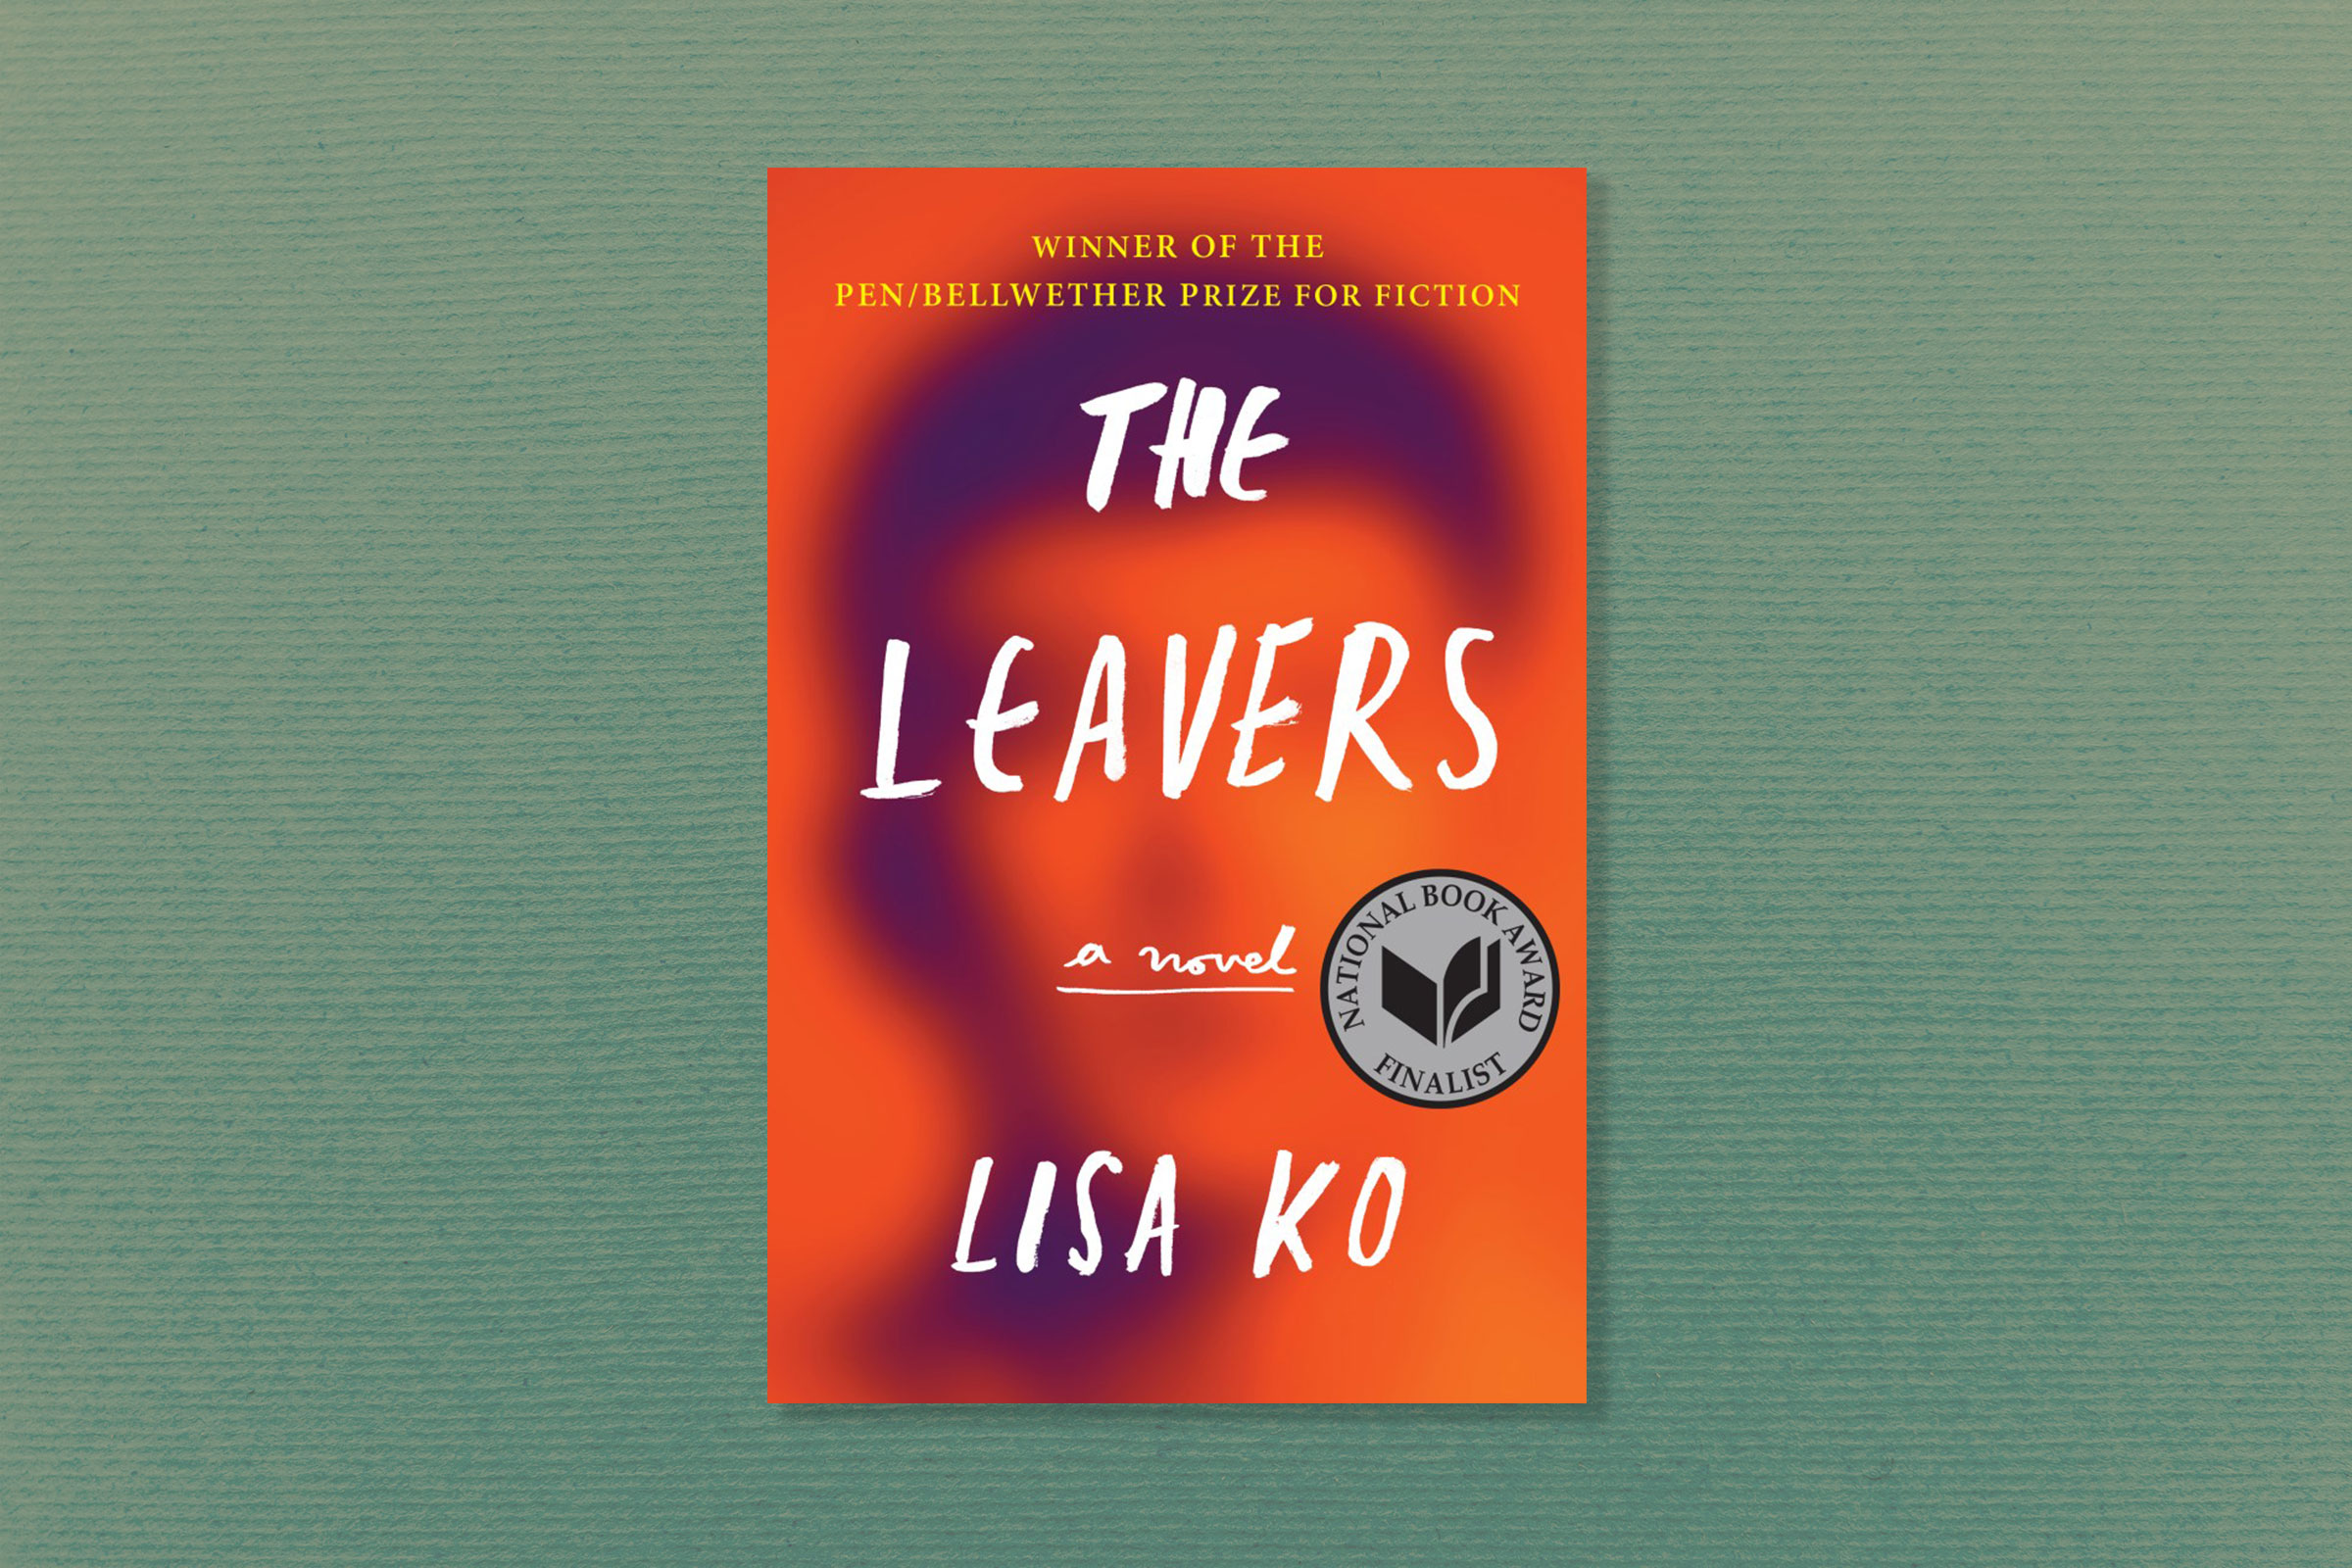 The Leavers, Lisa Ko